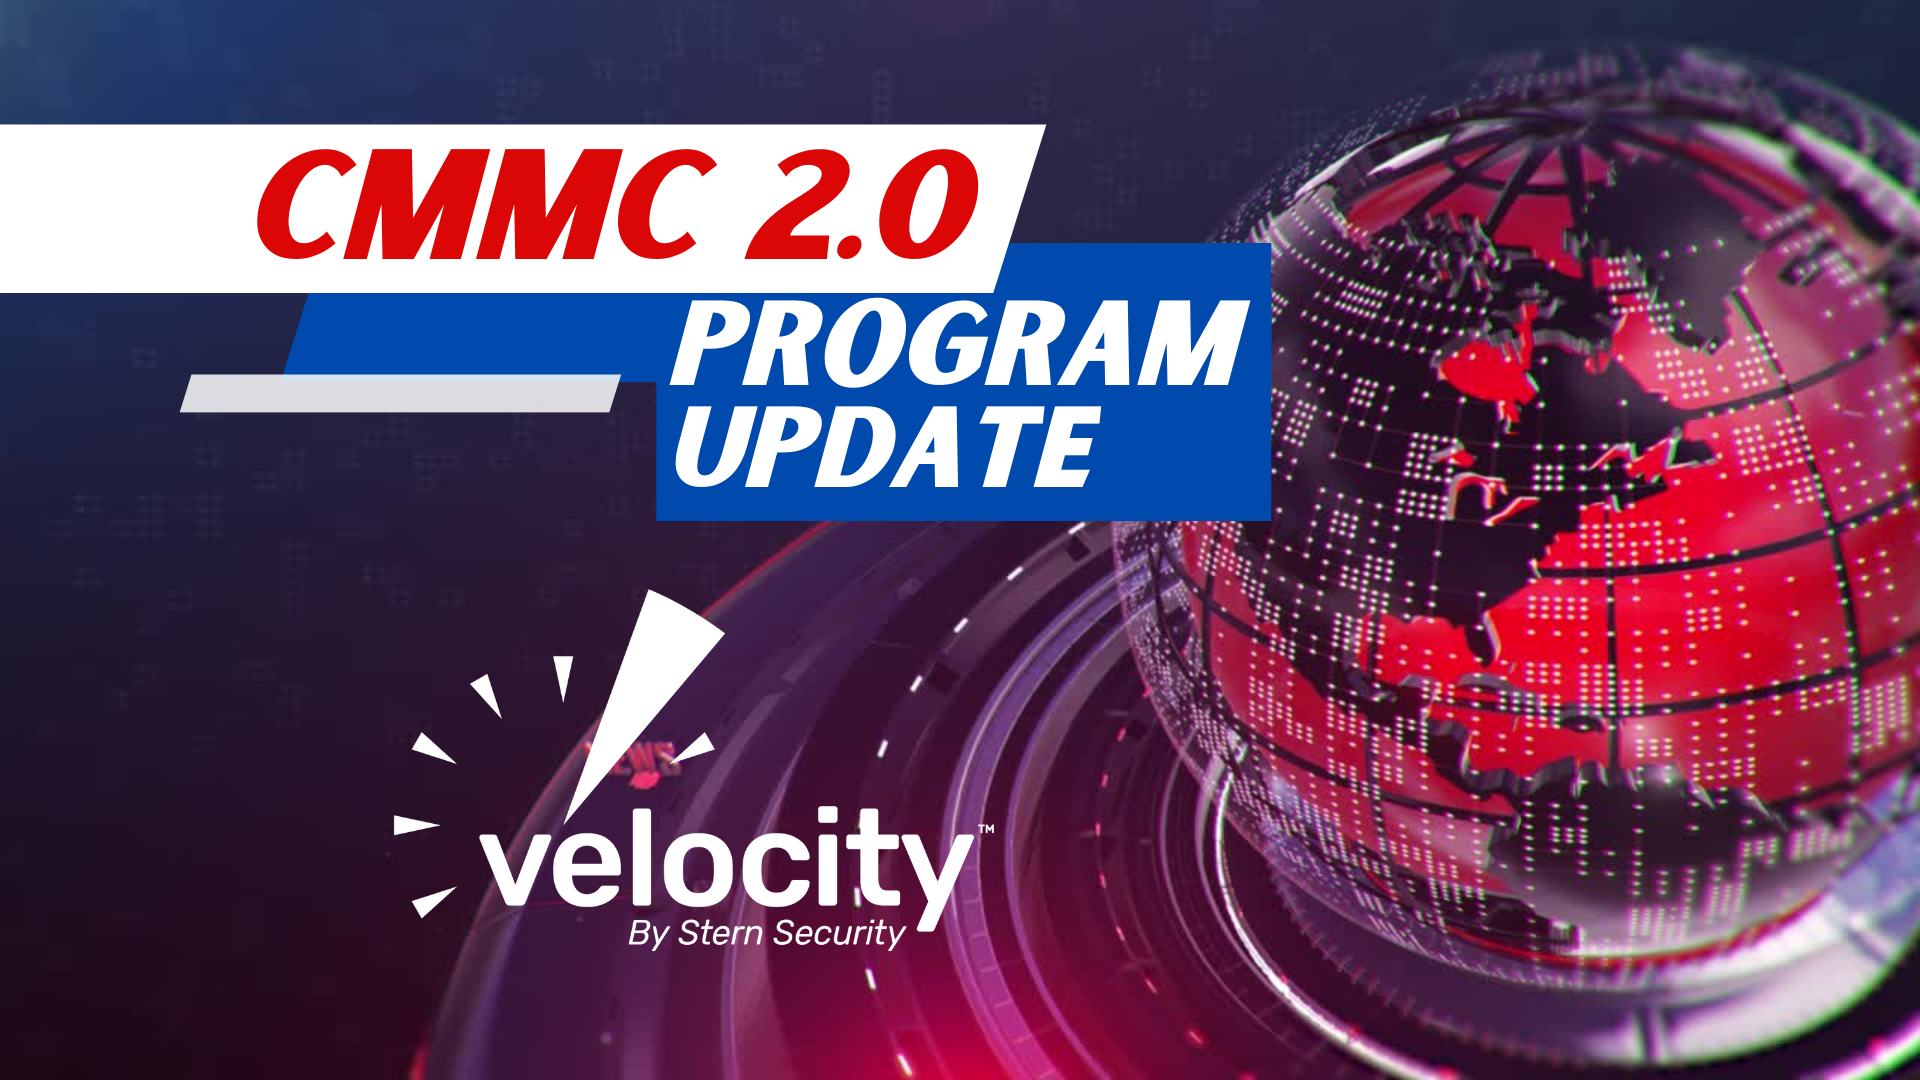 CMMC 2.0 Program Update